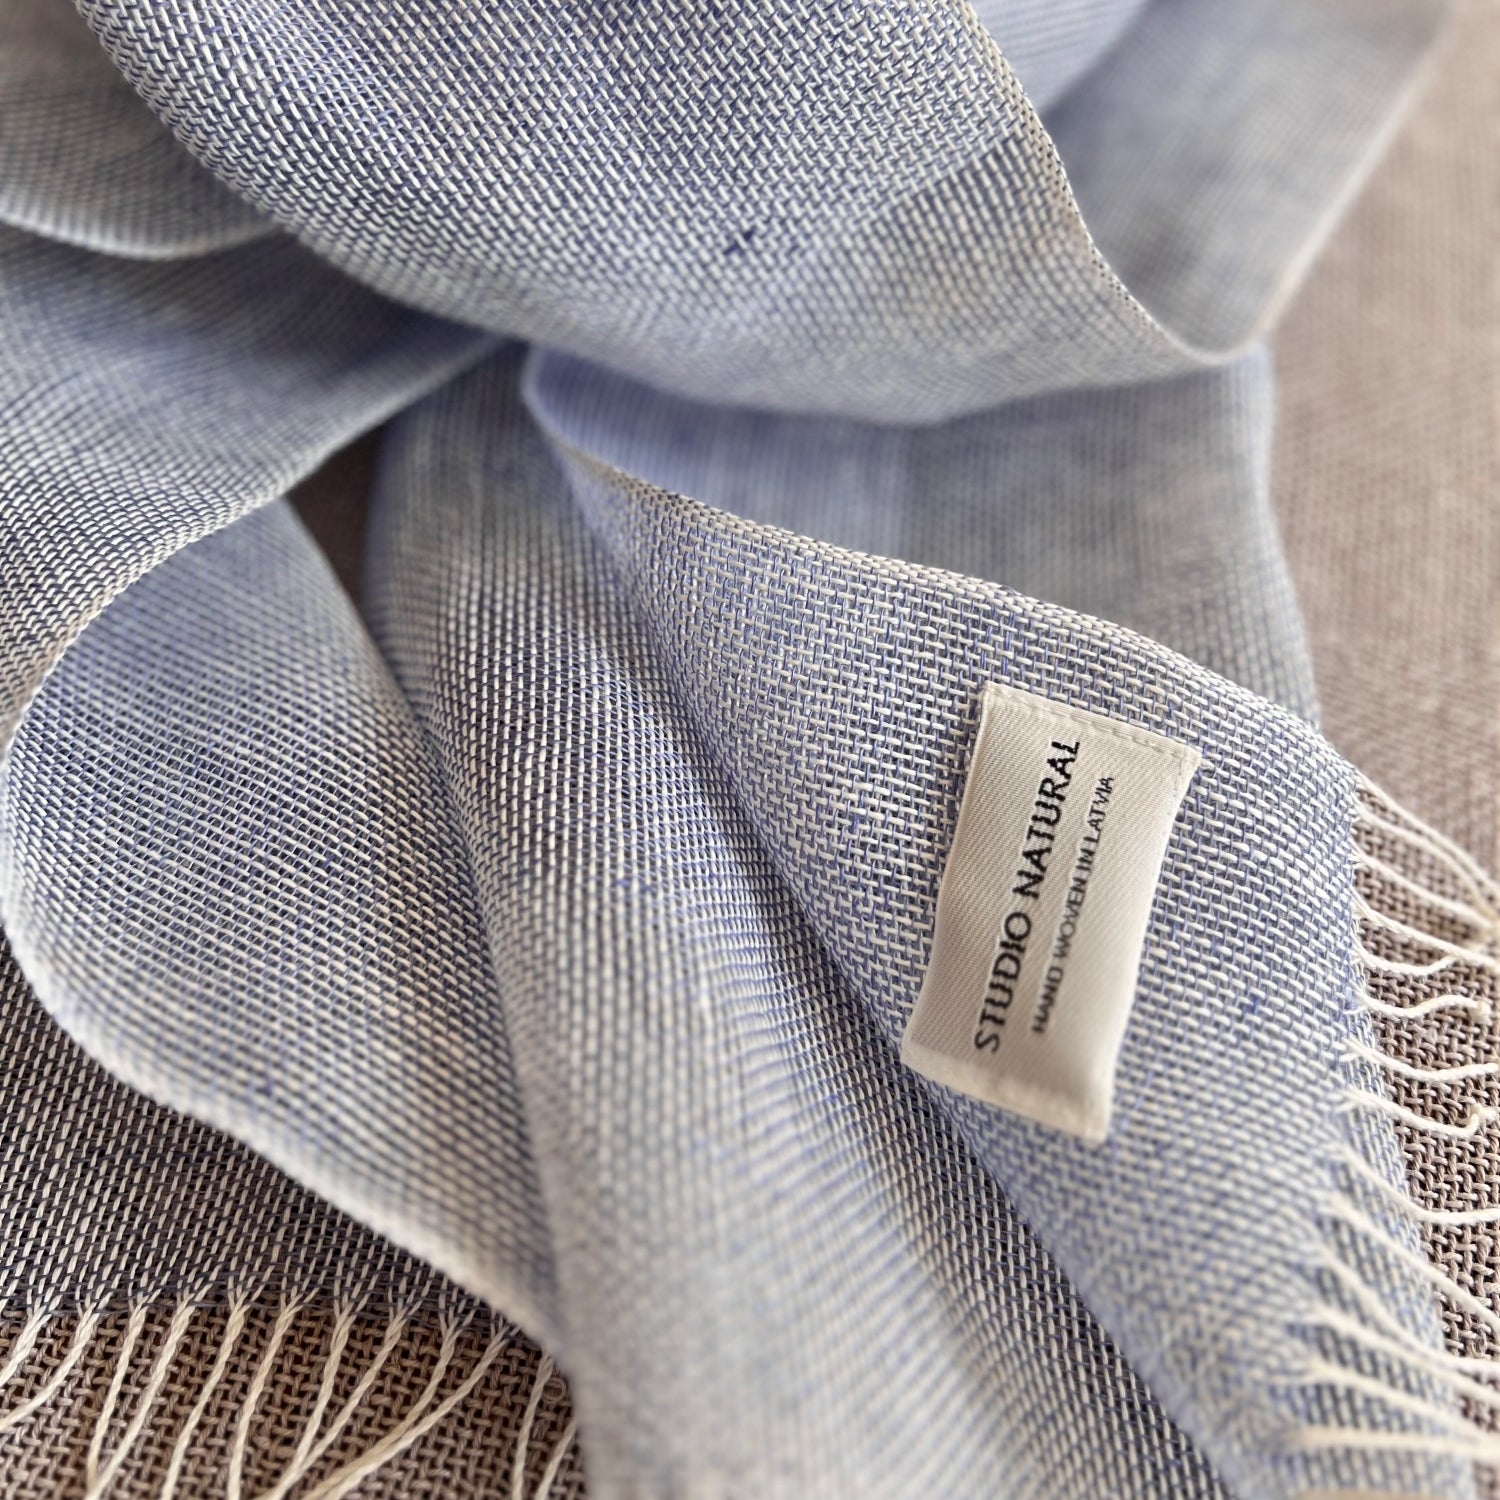 Handwoven Linen scarf in lavender 35x180 cm